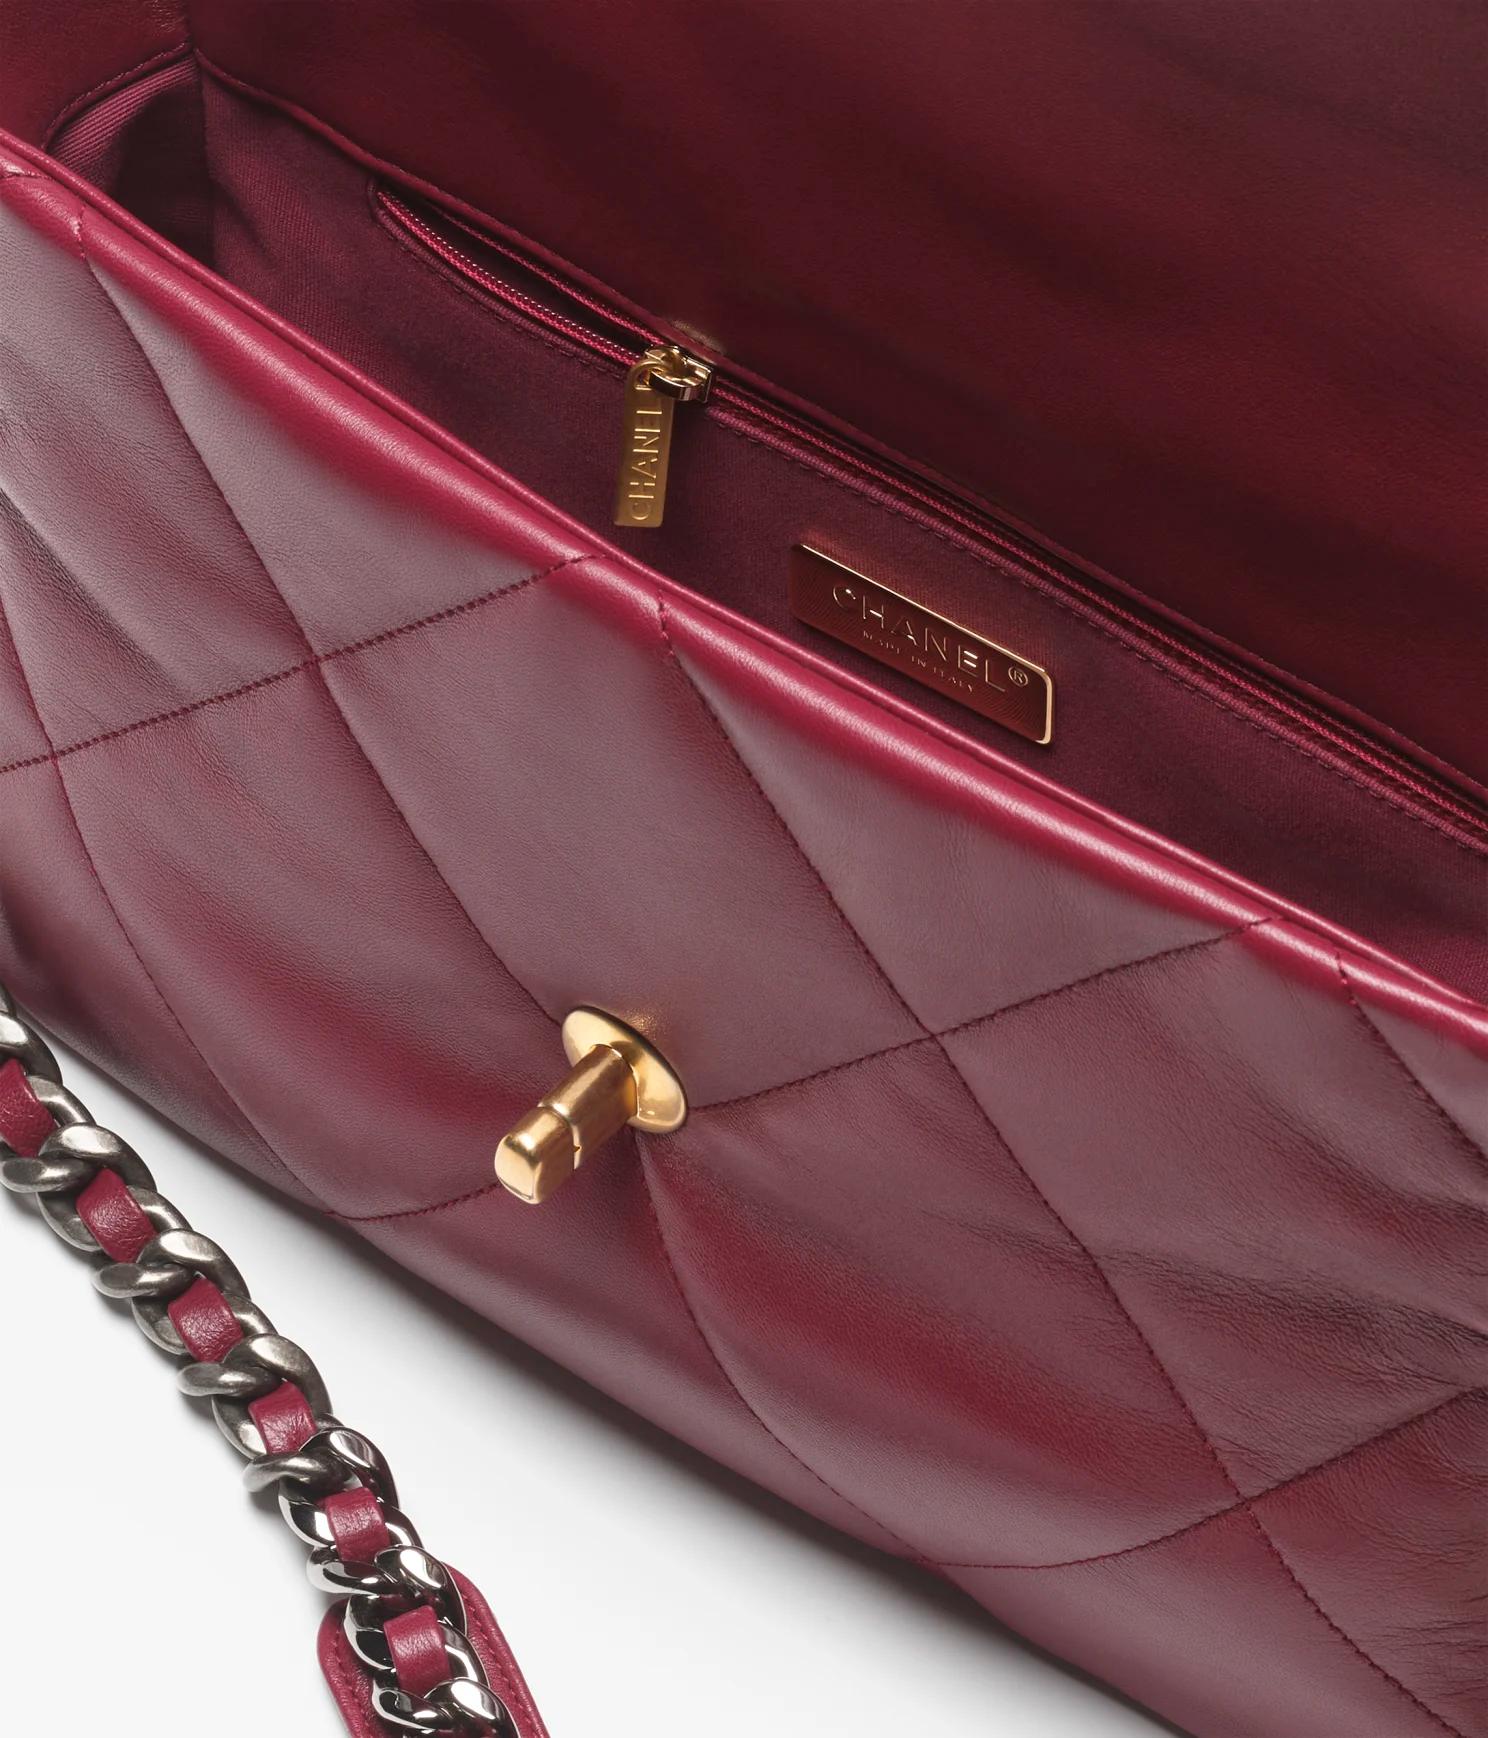 Túi Chanel Chanel 19 Large Handbag Shiny Lambskin & Ruthenium-Finish Metal Nữ Đỏ 